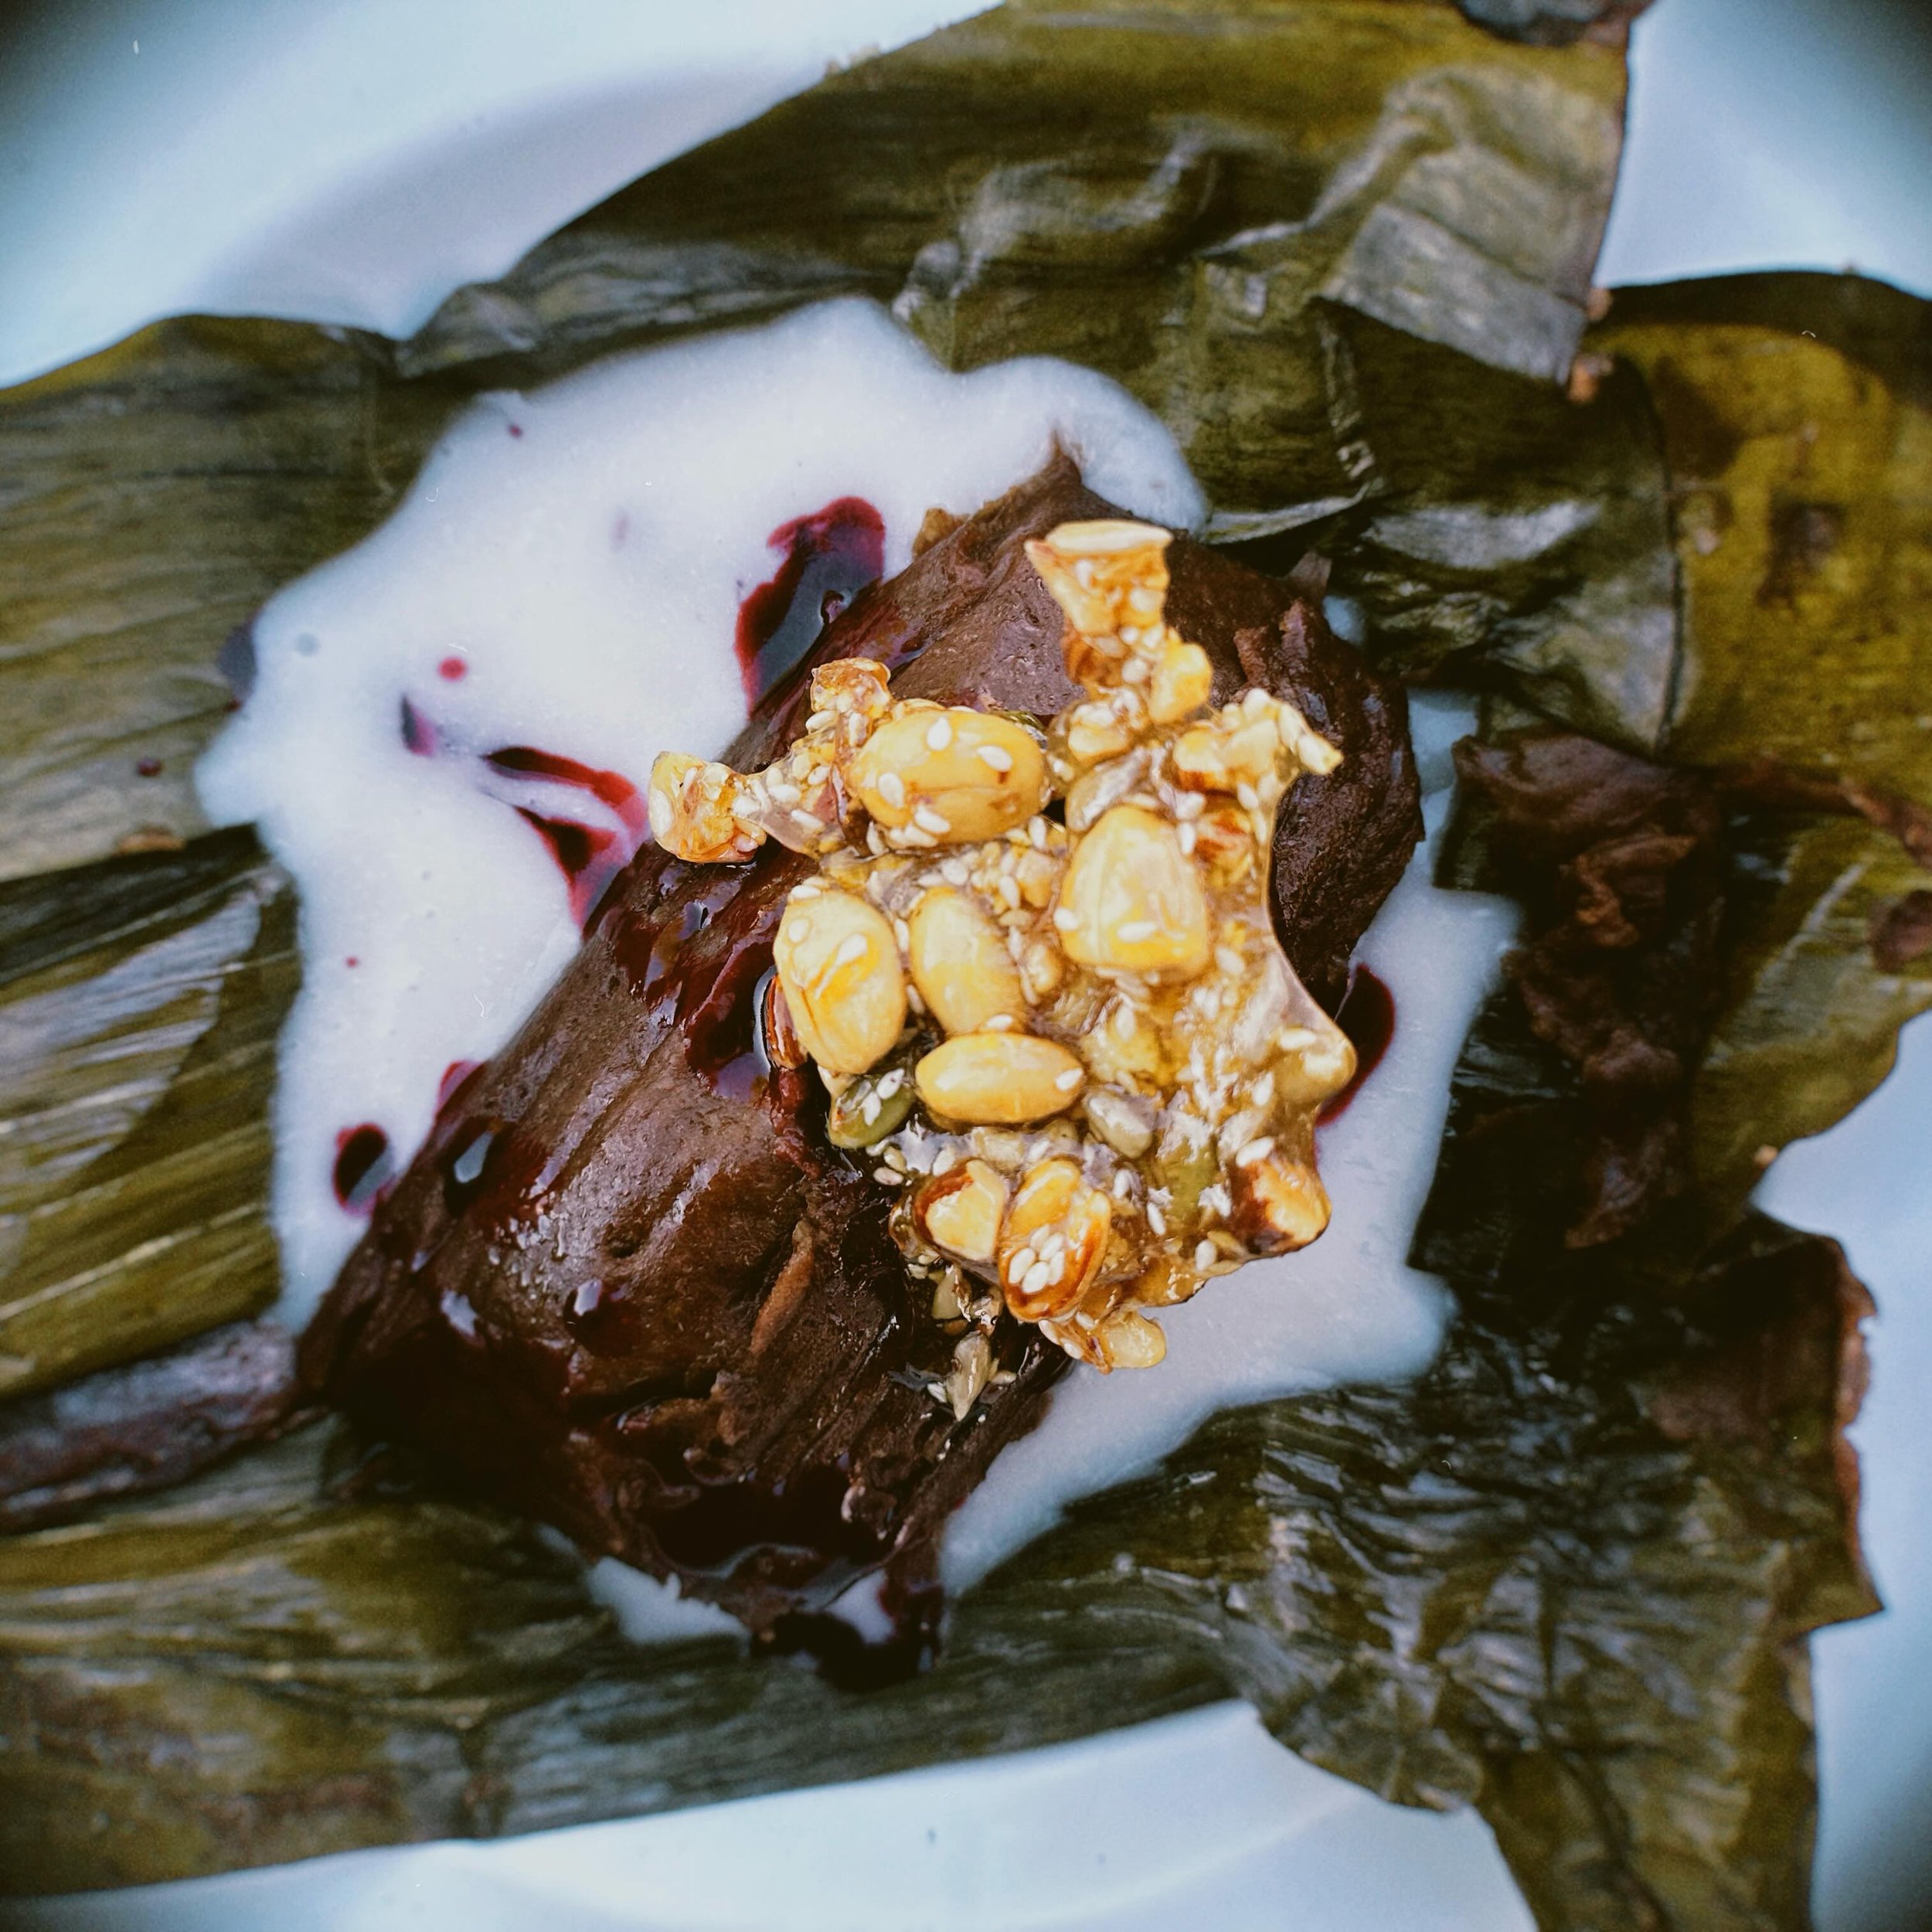 Chocolate Tamal #gordoscantina #authenicmexican #mexicanstteetfood #tamal #sweet #dessert #Choclate #peanut #offmenu #especial #cincodemayo #centralmexico #bushwick #brooklyn #nyc #nymademexicoapproved